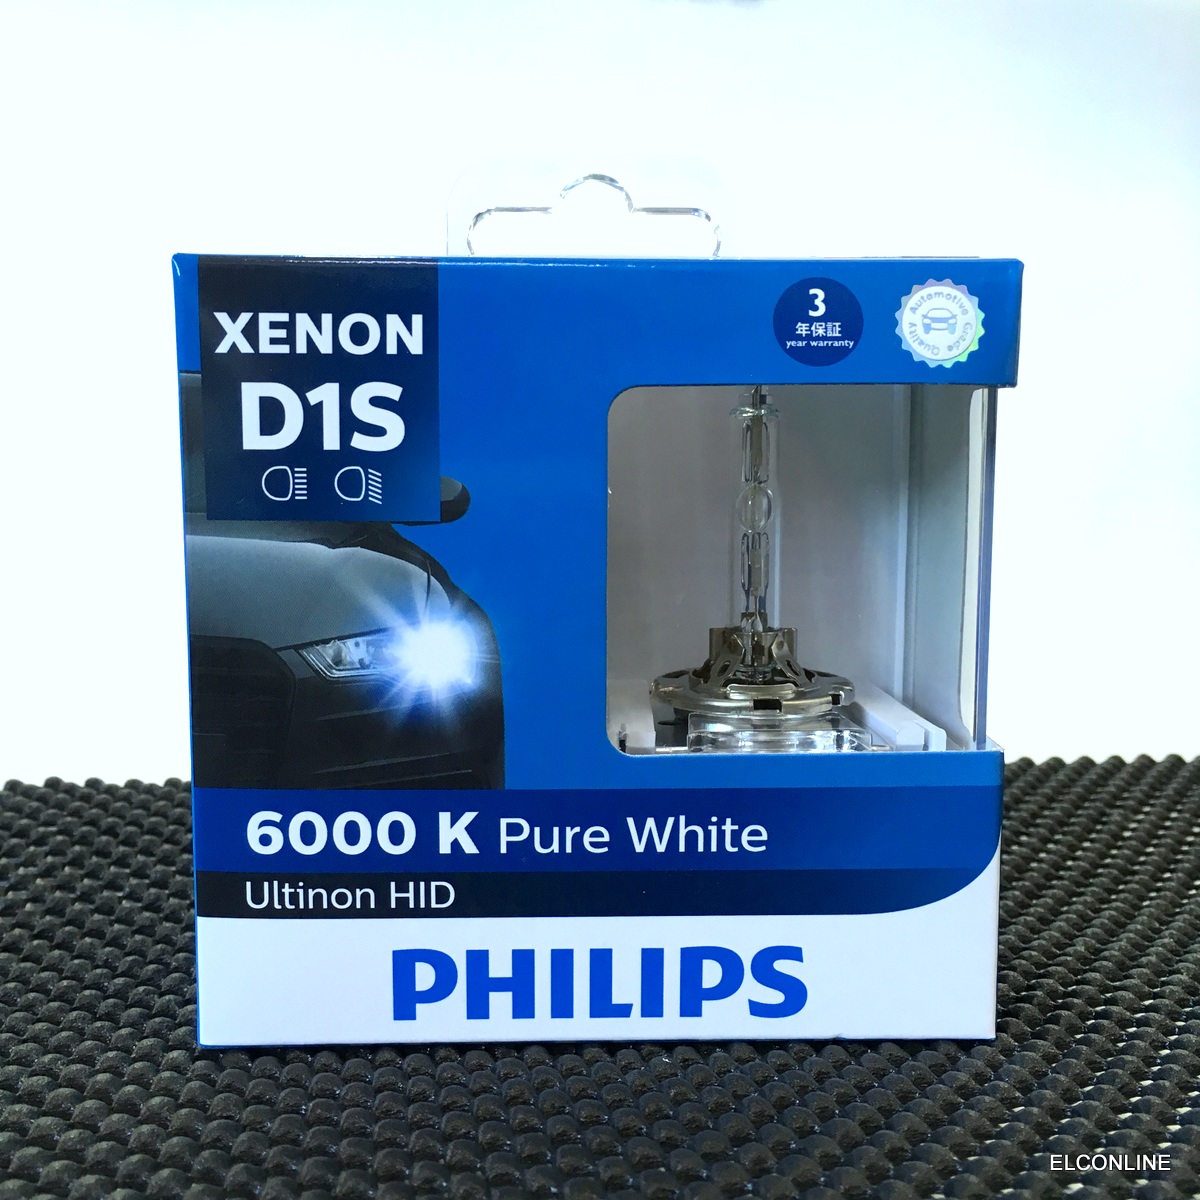 Philips xenon